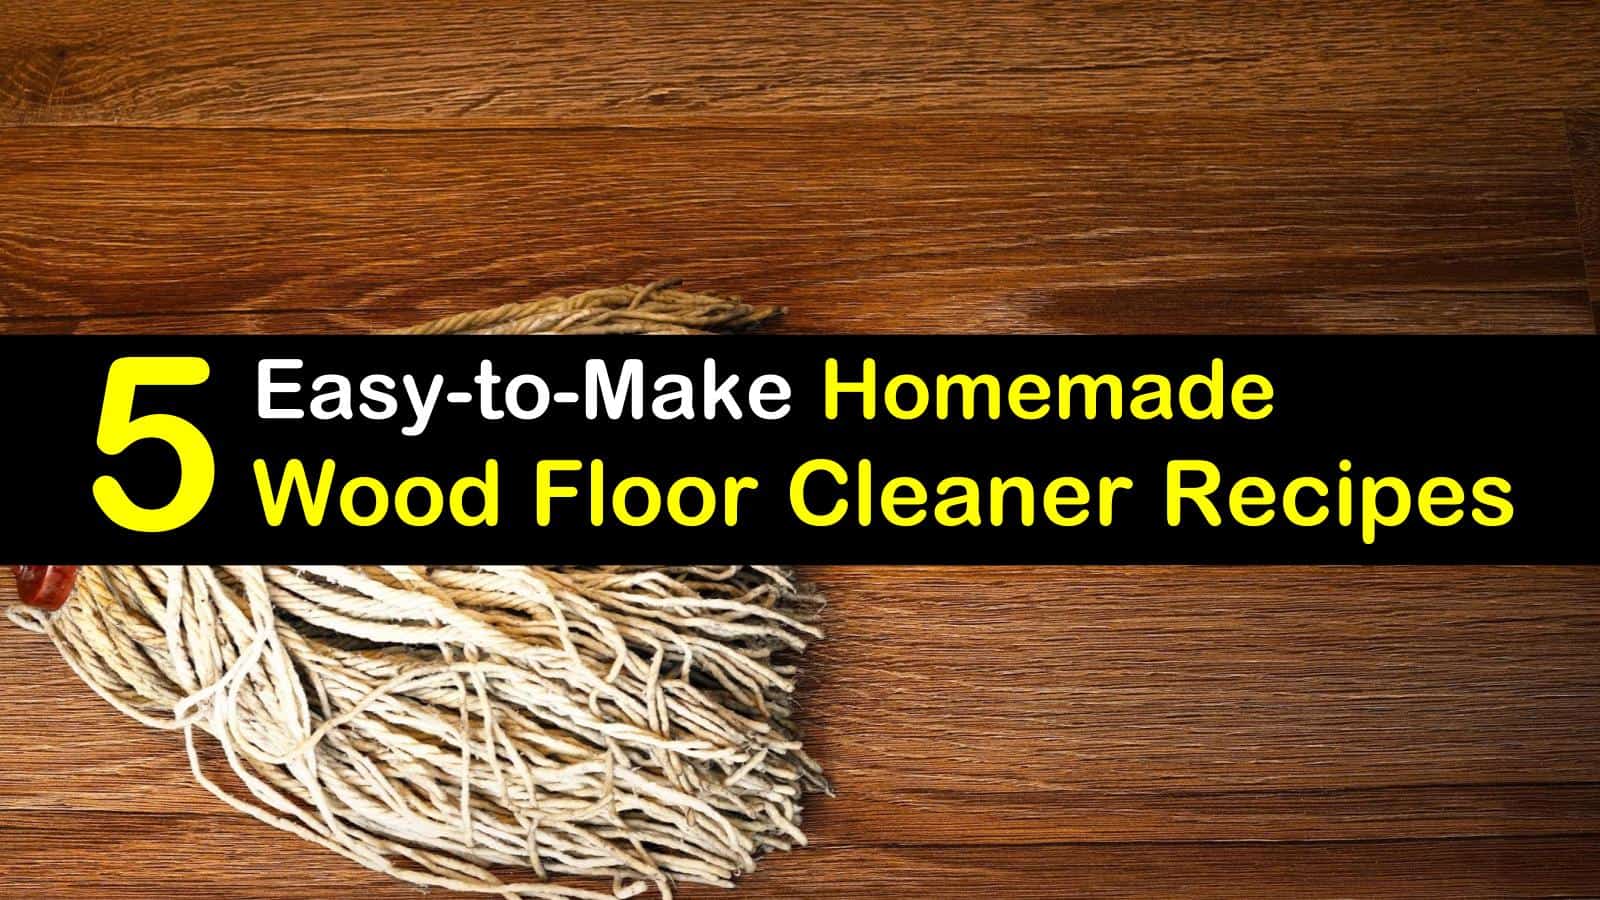 Homemade Wood Floor Cleaner Recipes, Best Homemade Cleaning Solution For Hardwood Floors